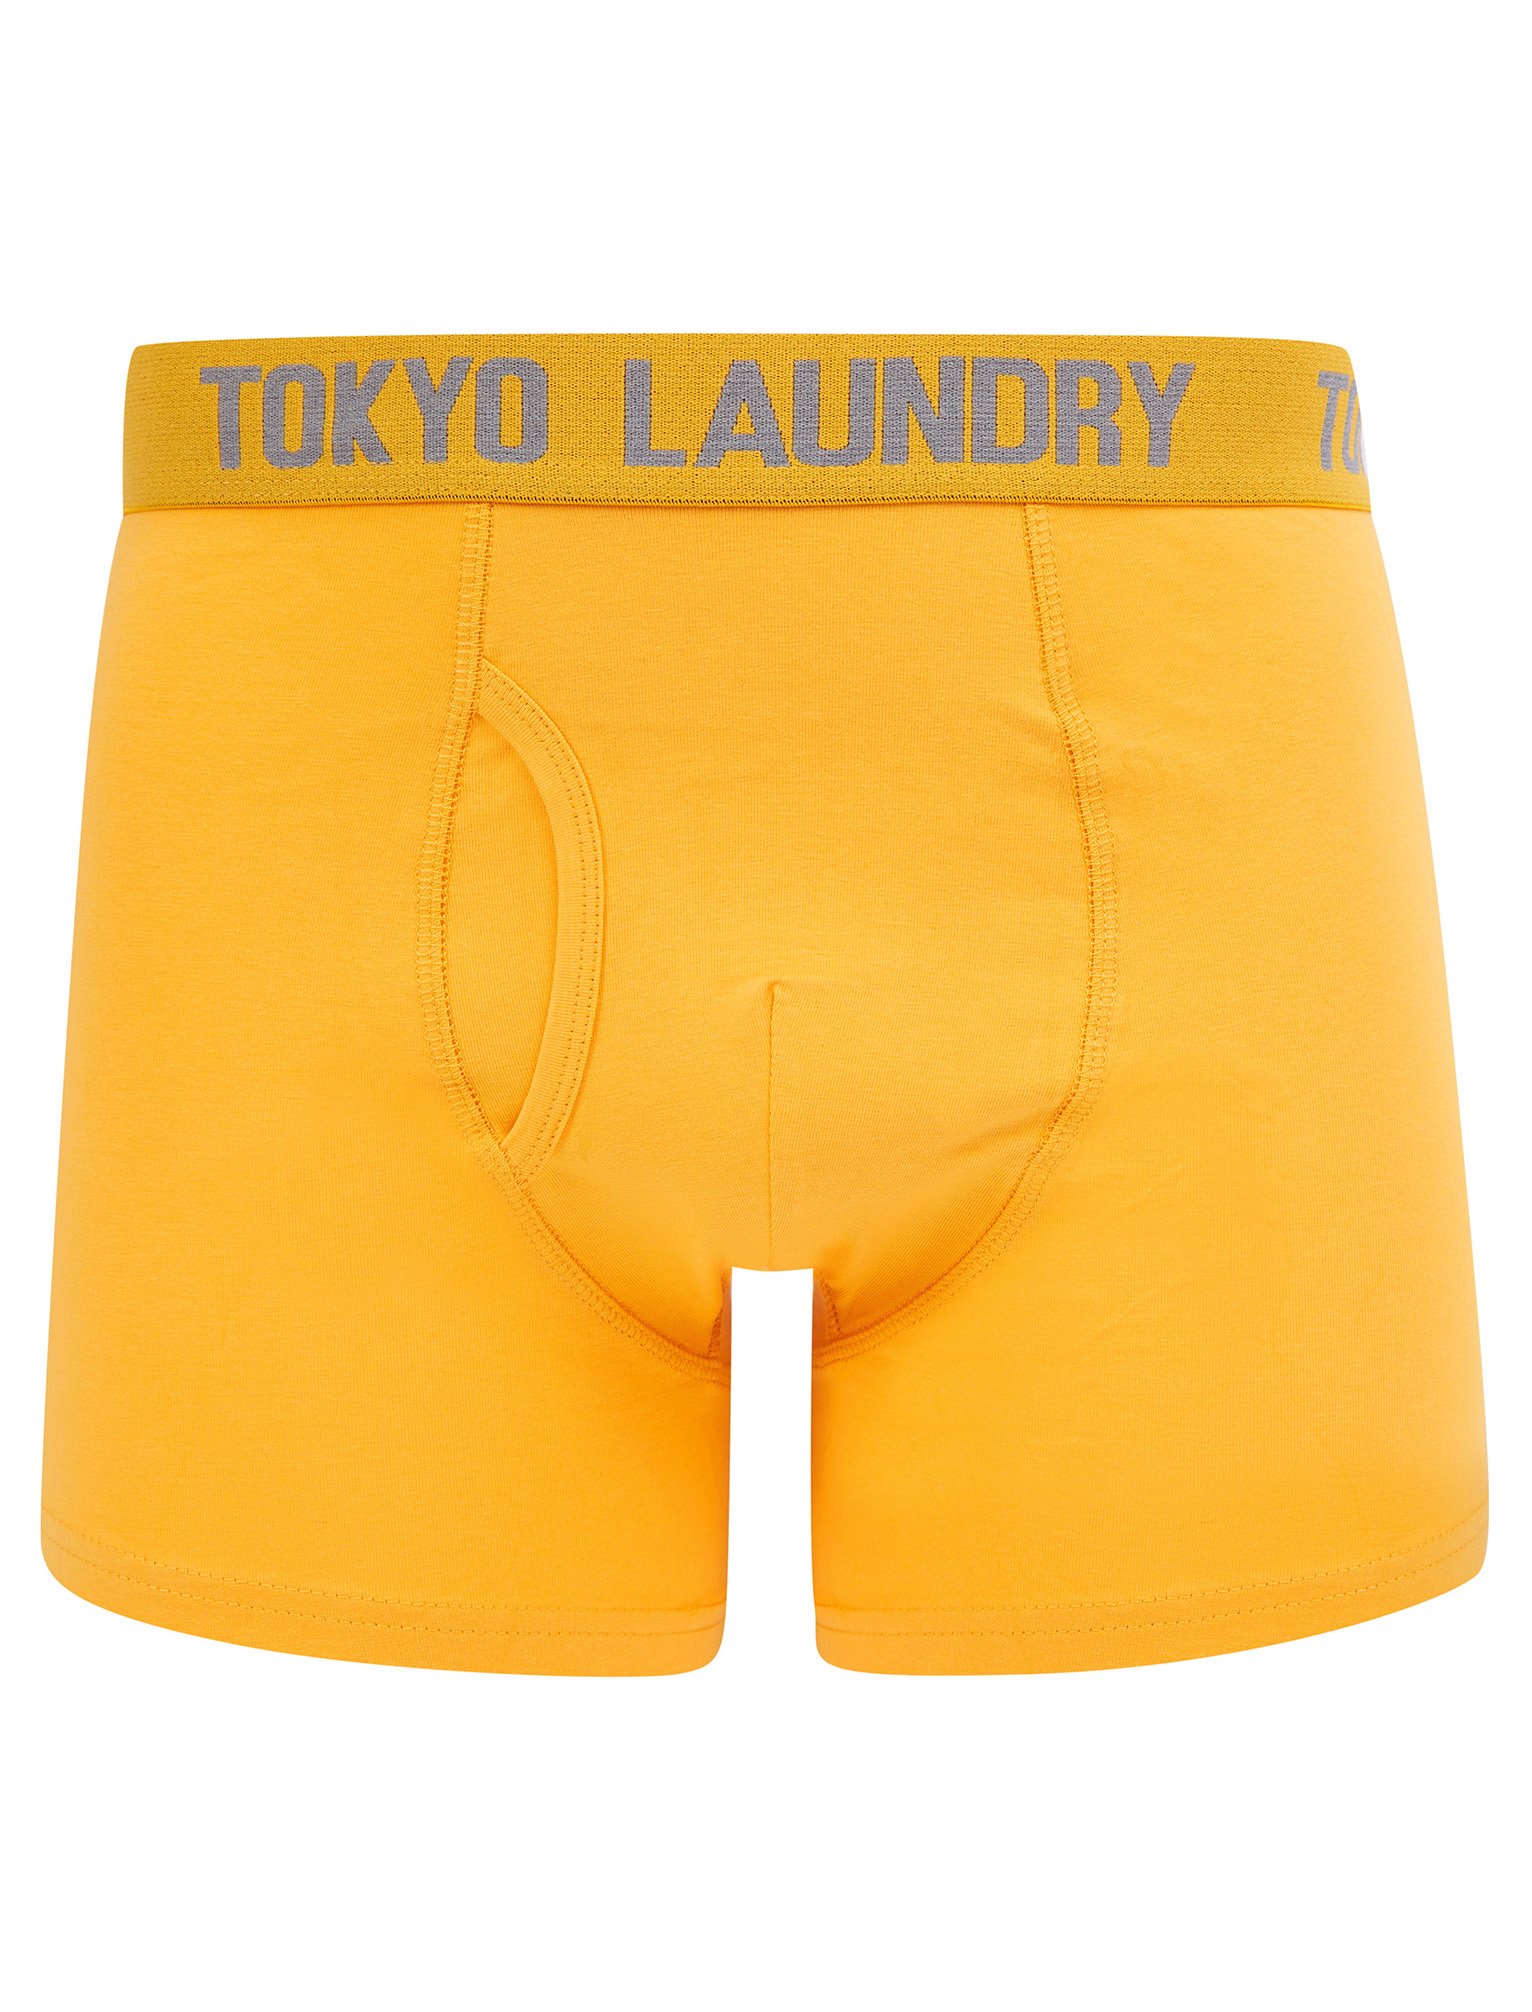 Tokyo Laundry Boxer Shorts Men's 2 Pack Stretch Cotton Underwear Boxers ...